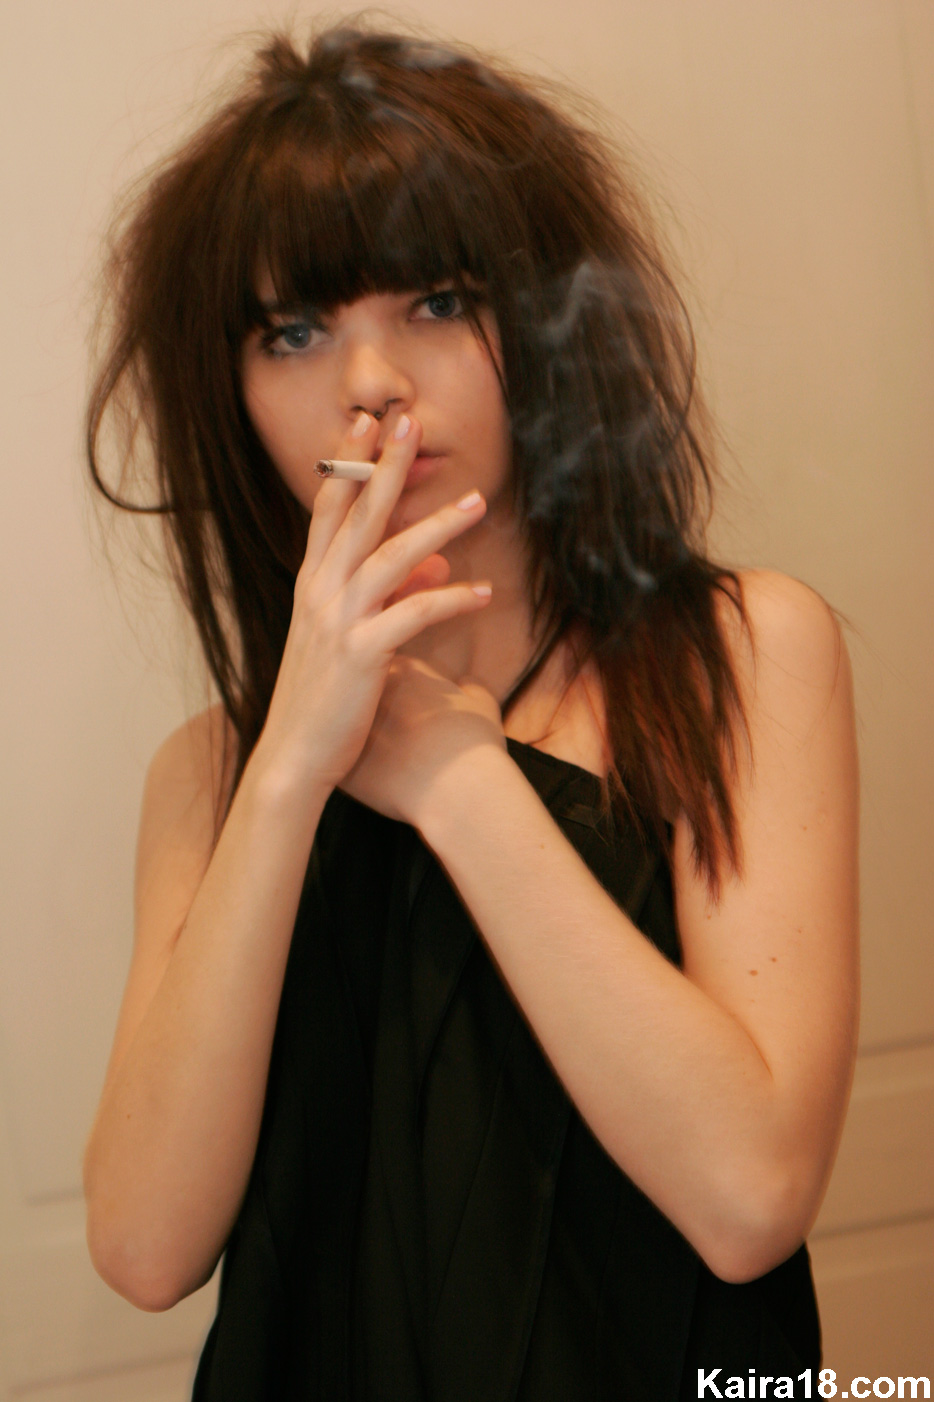 Bald punk girl smokes back cigarettes